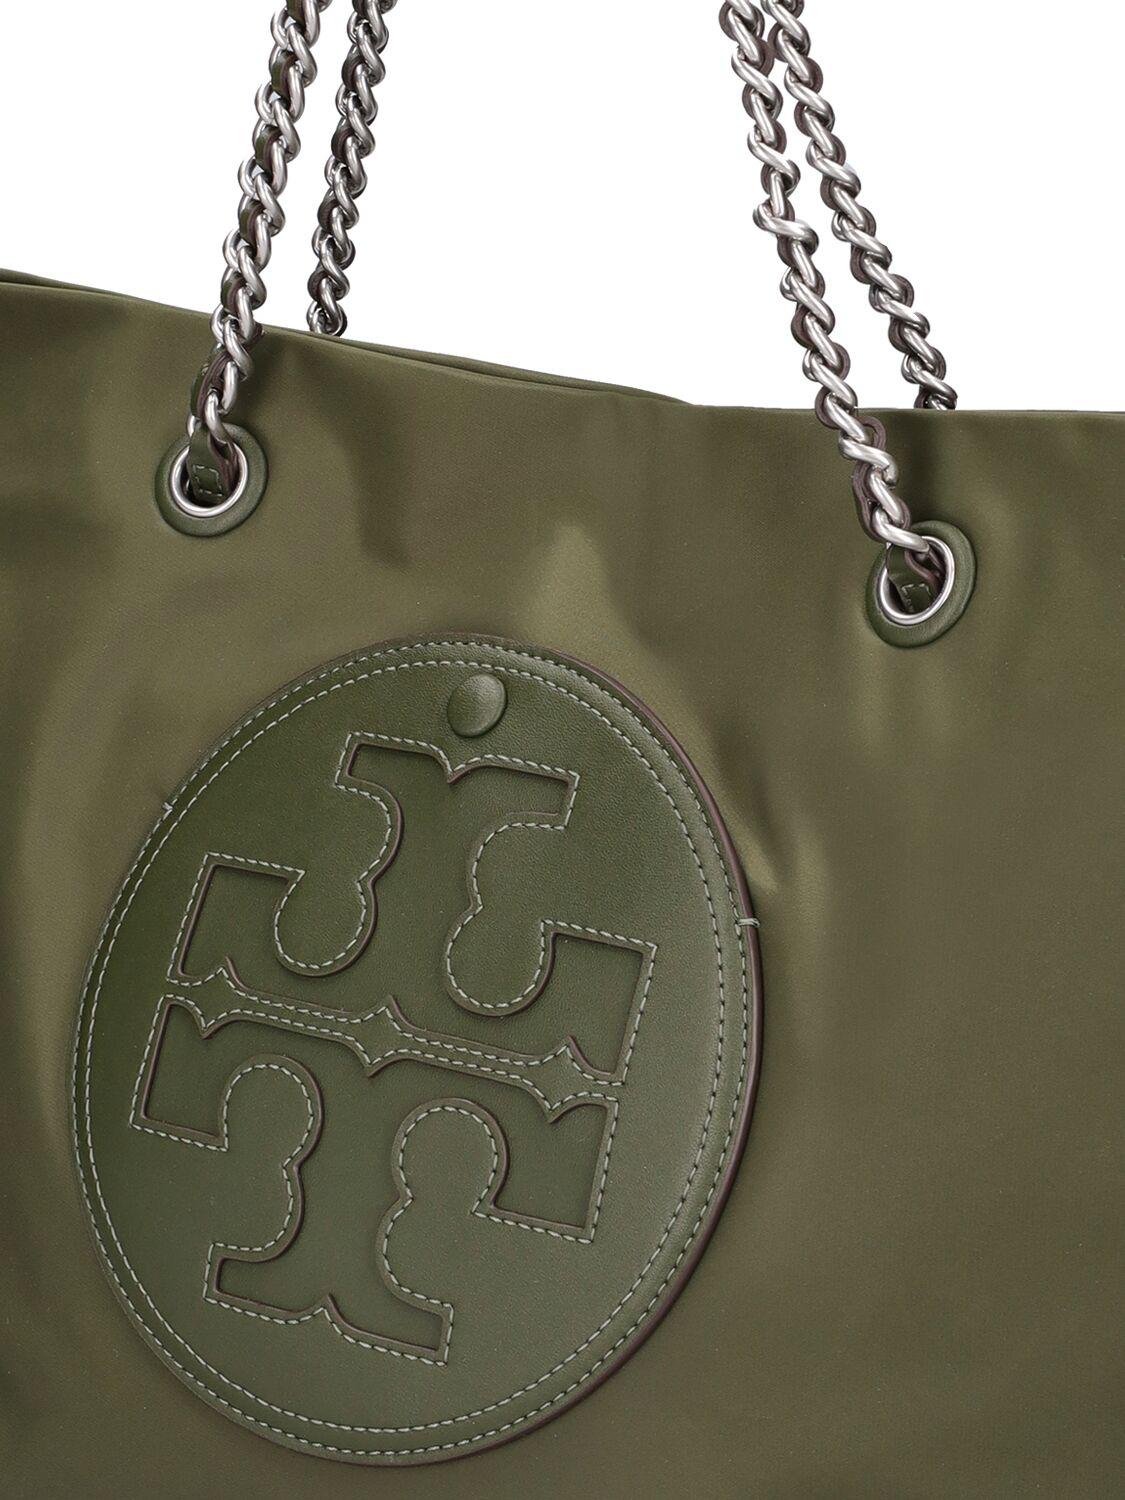 TORY BURCH: Ella Tote nylon bag with emblem - Beige